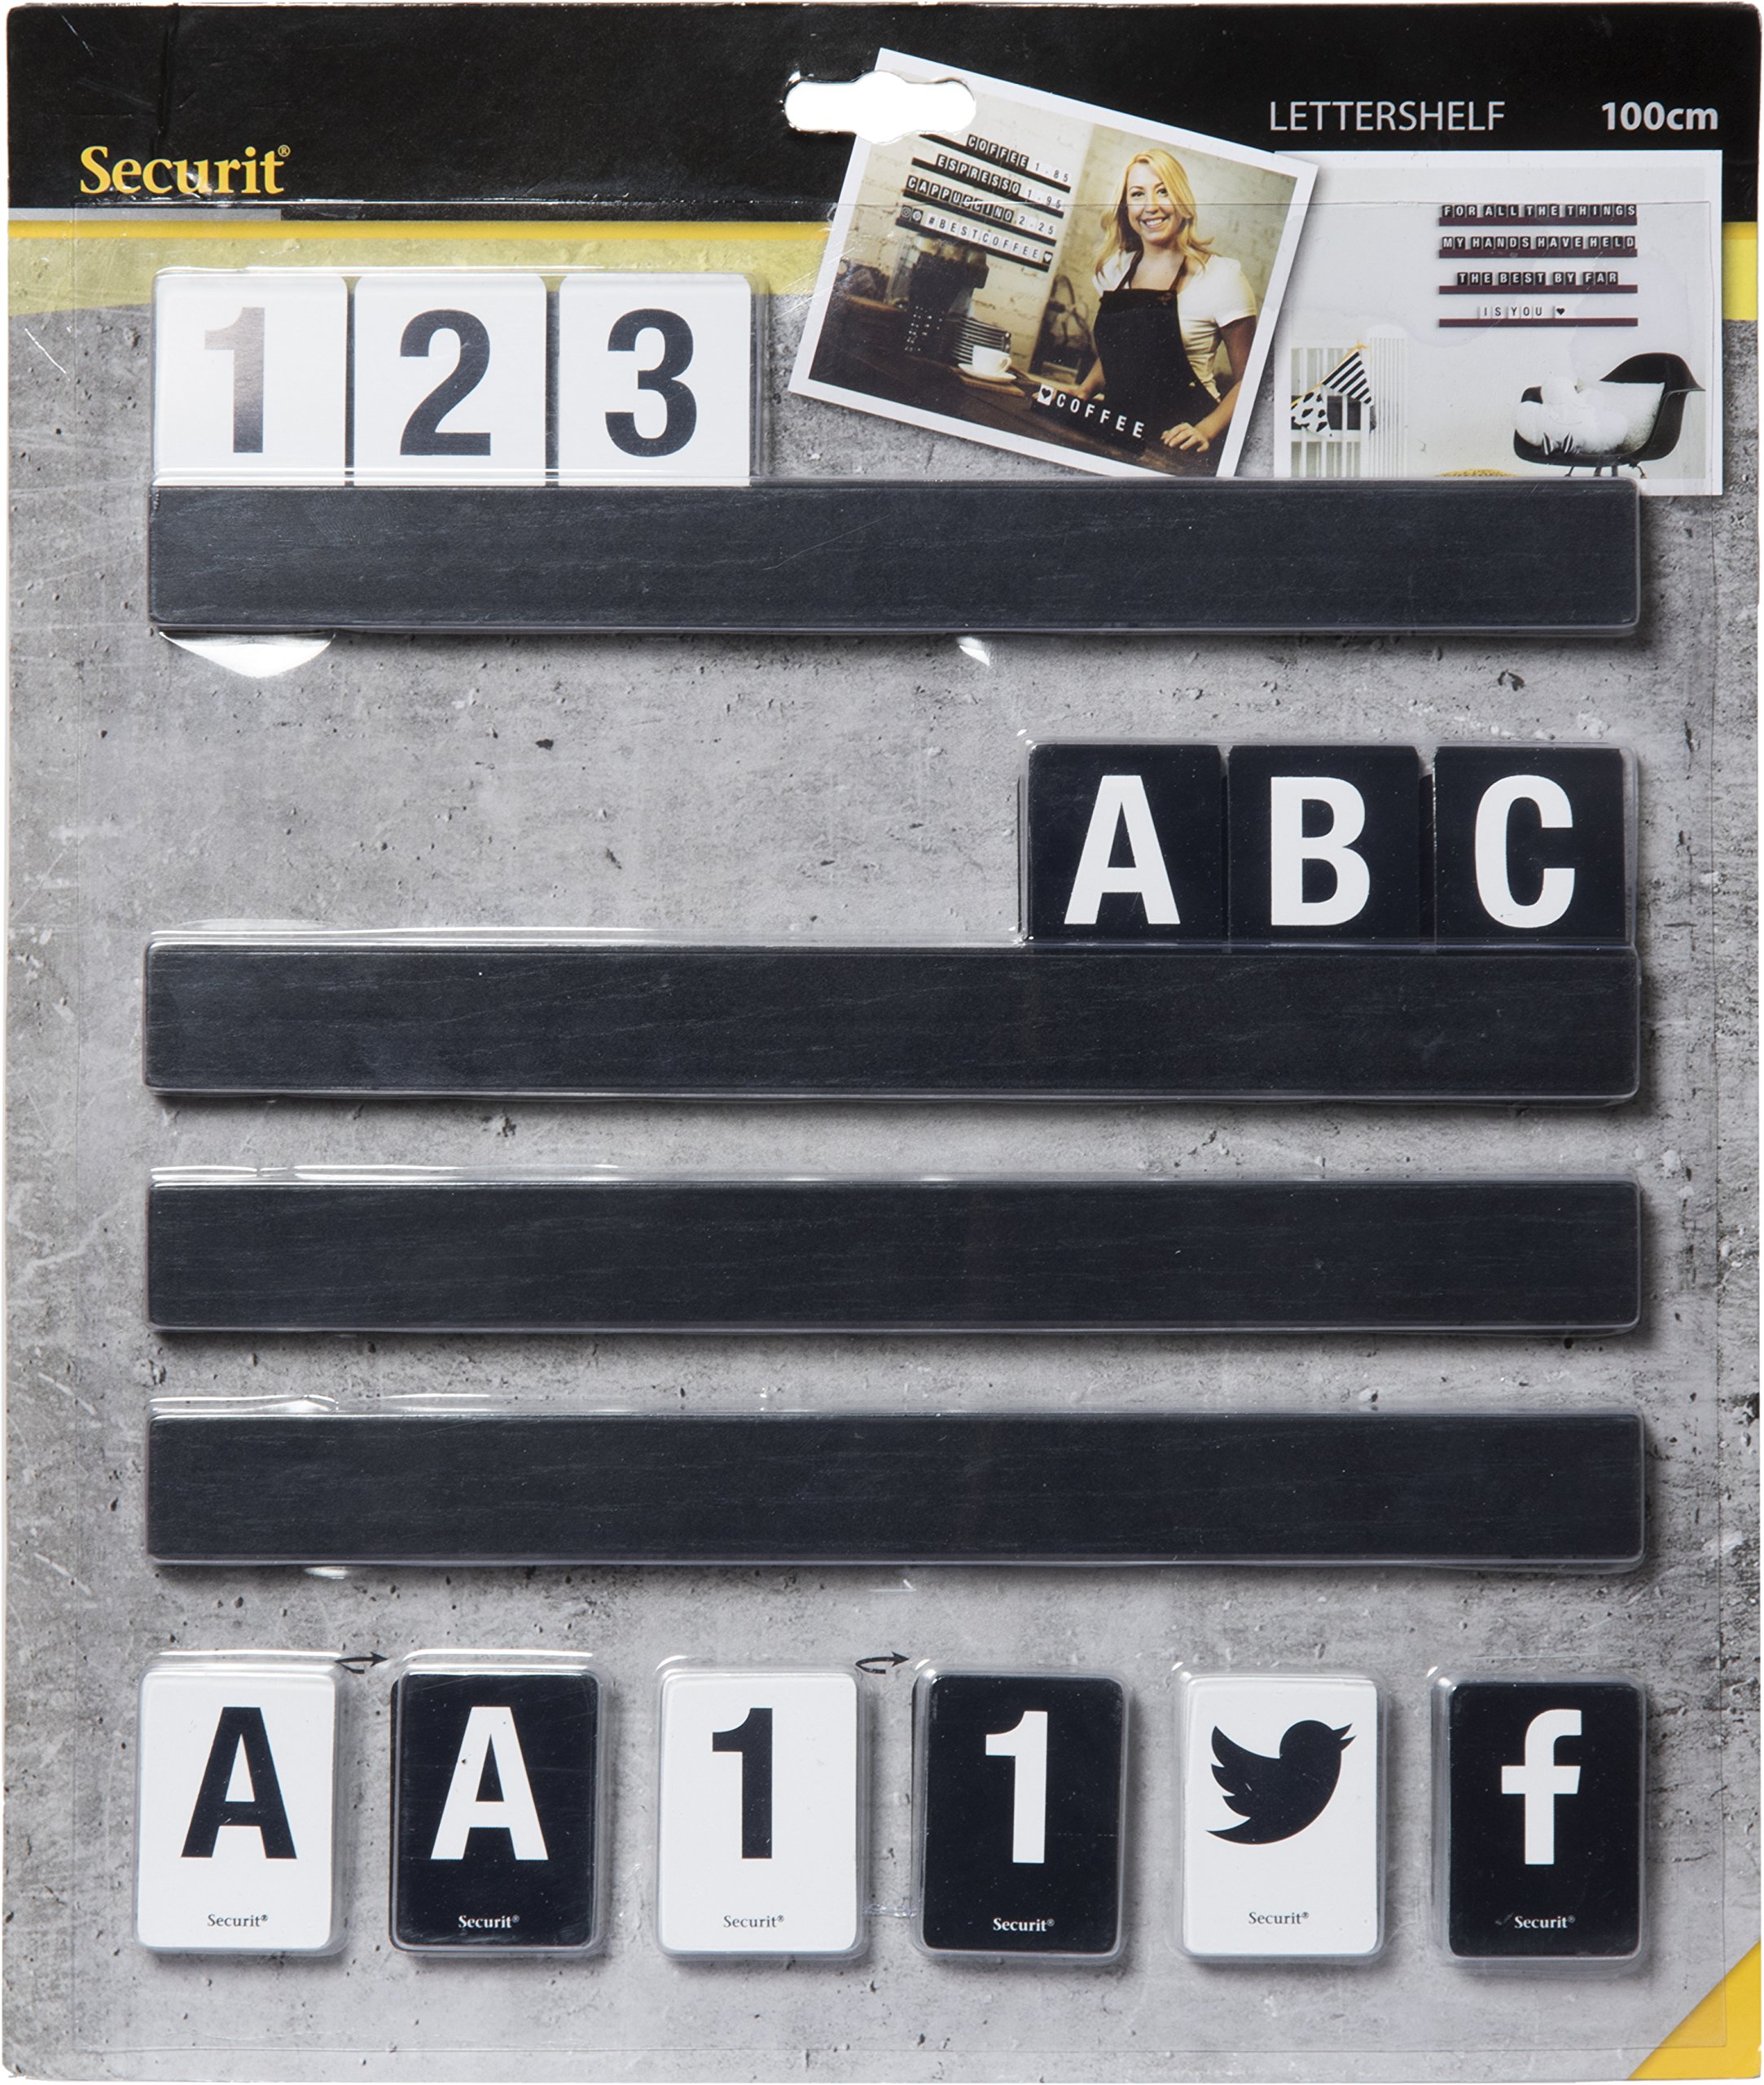 Kit Letter Shelf - mensola porta messaggi nera + 169 tessere (lettere e numeri) - Securit